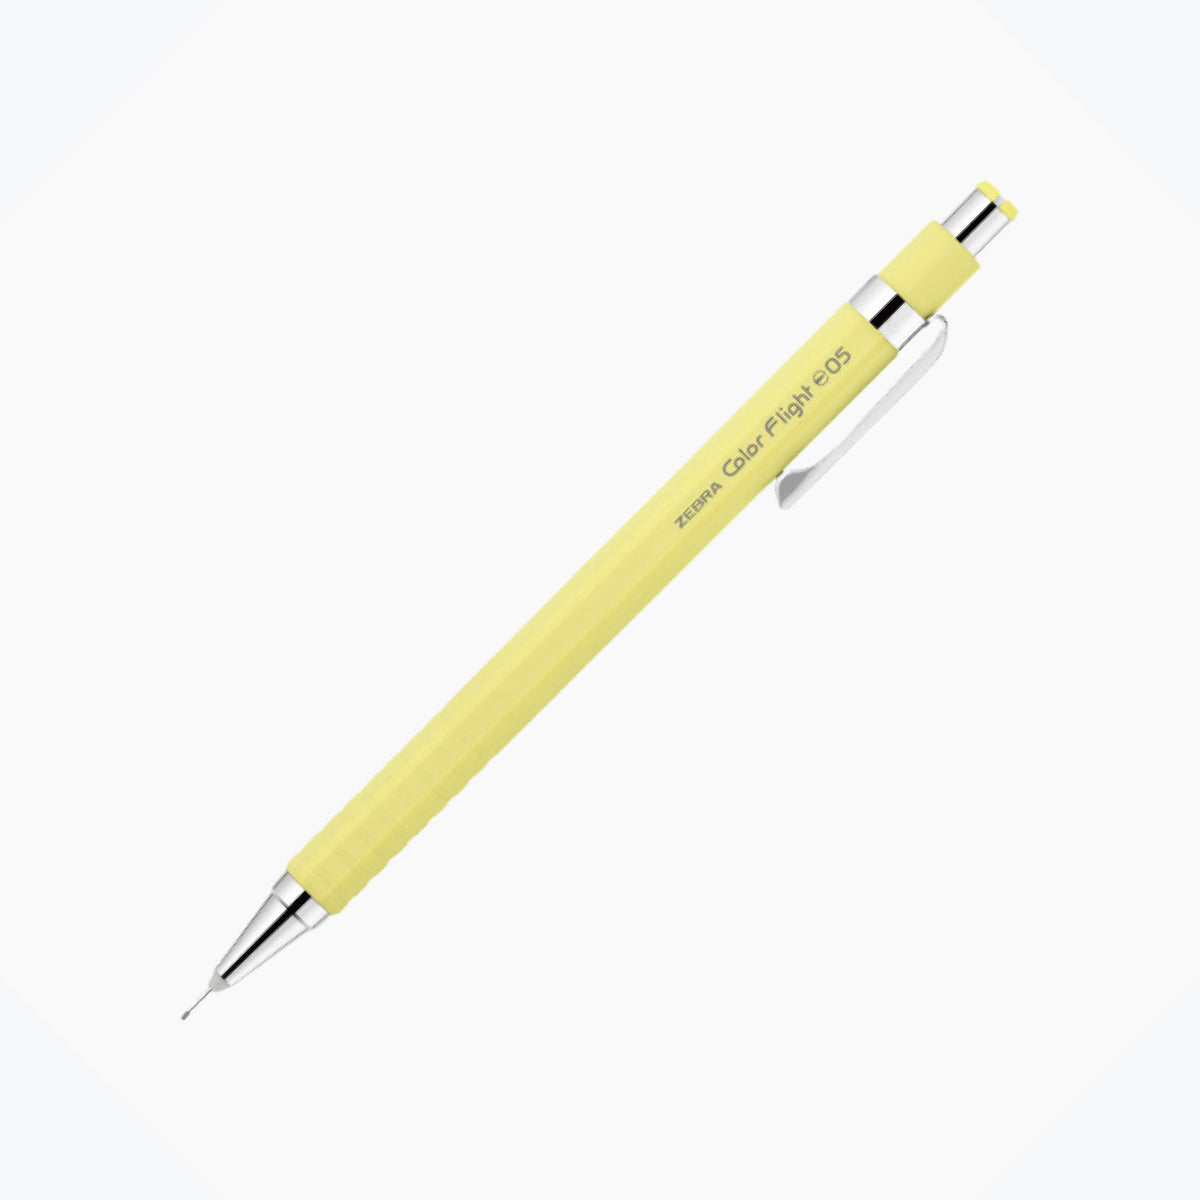 Zebra - Mechanical Pencil - Color Flight Pastel - 0.5mm - Yellow <Outgoing>